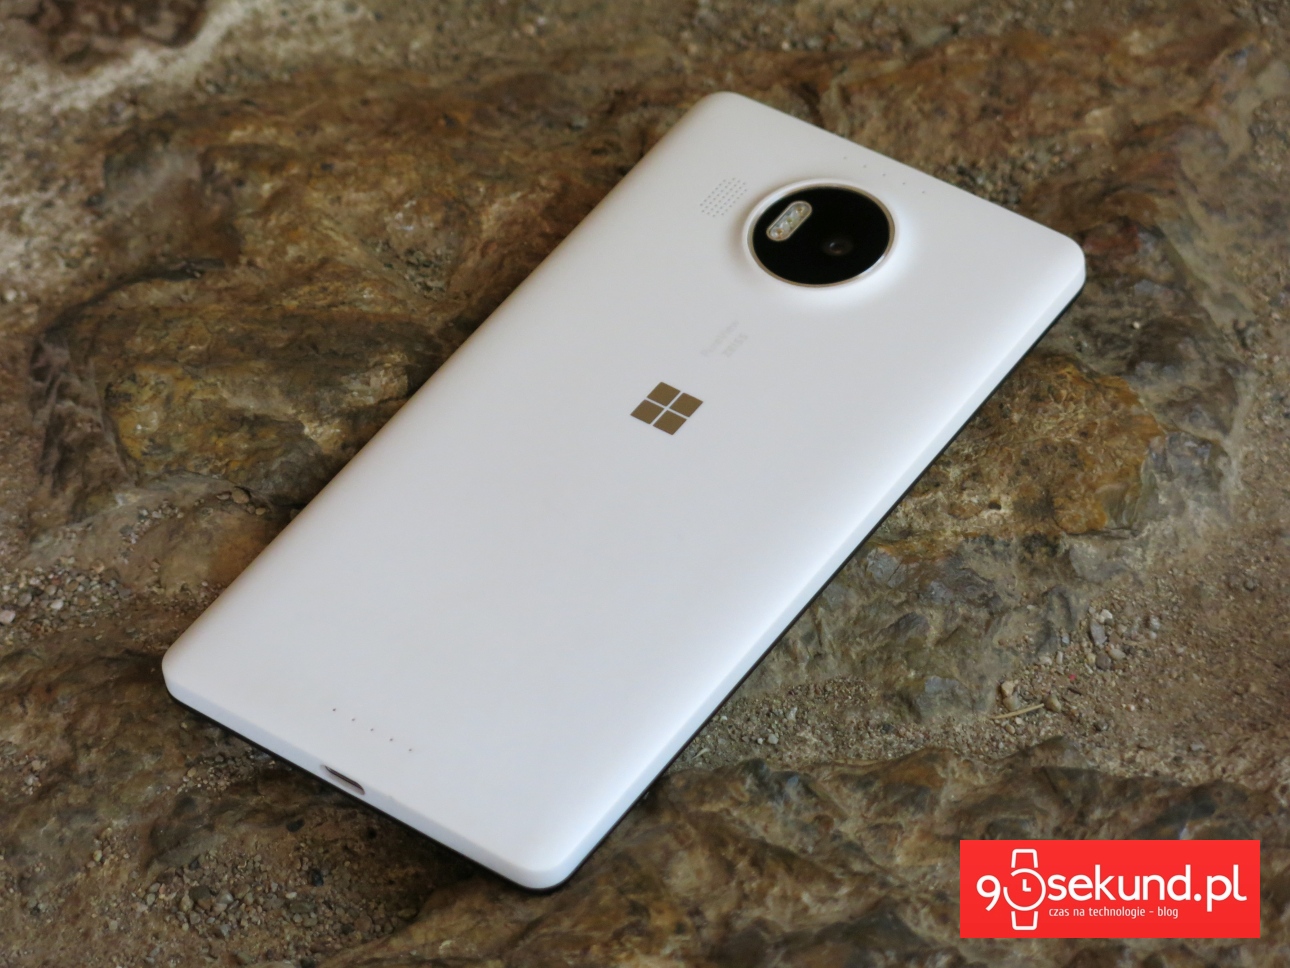 Recenzja Microsoft Lumia 950XL - 90sekund.pl